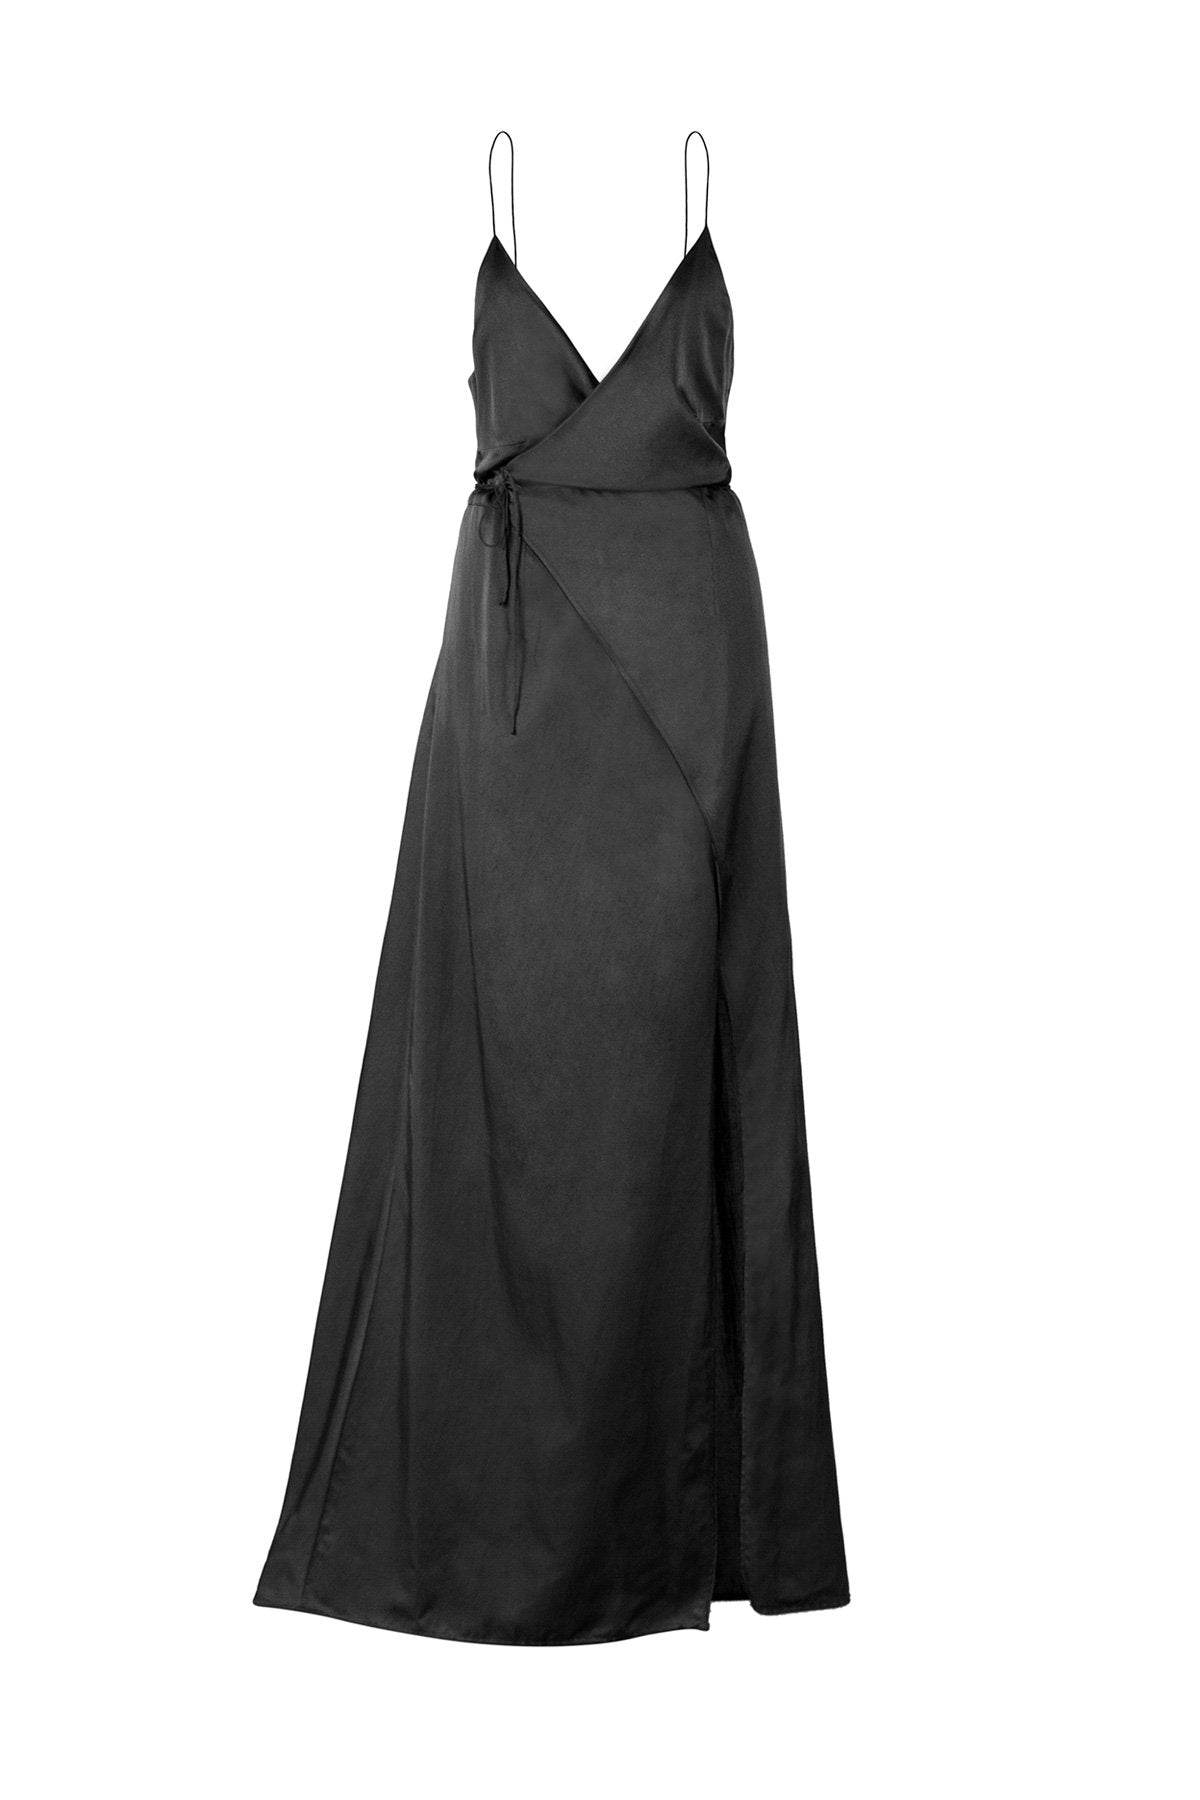 The Matisse Full Length Dress - Ebony - LOOMES